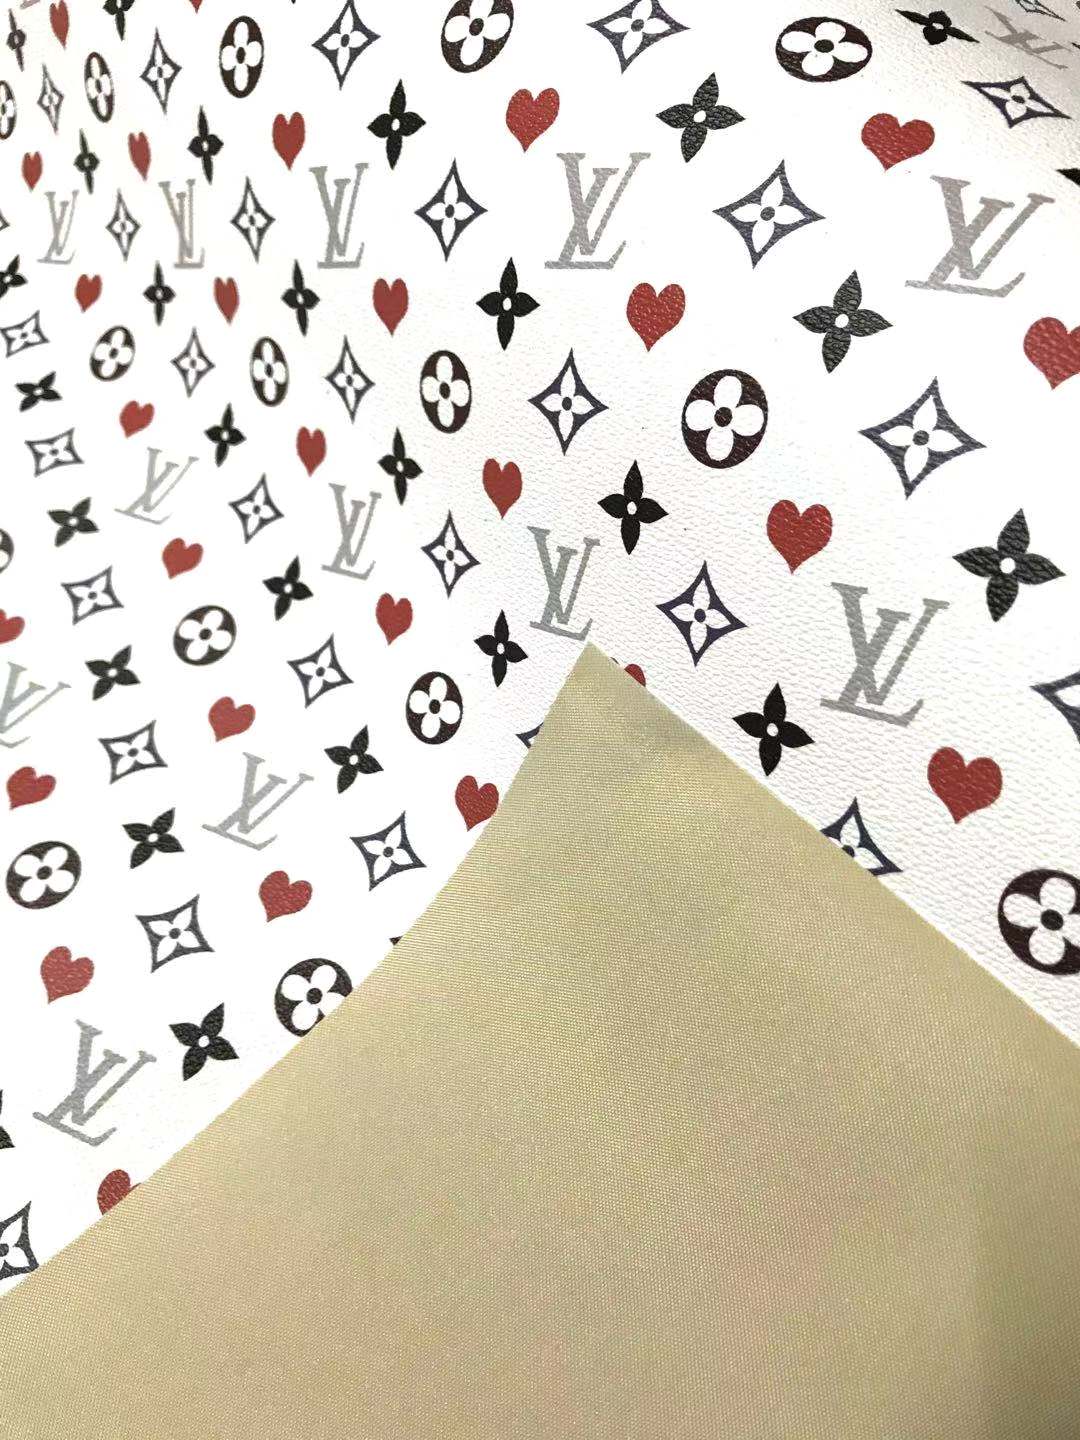 Trending LV Heart Leather Fabric for Bag